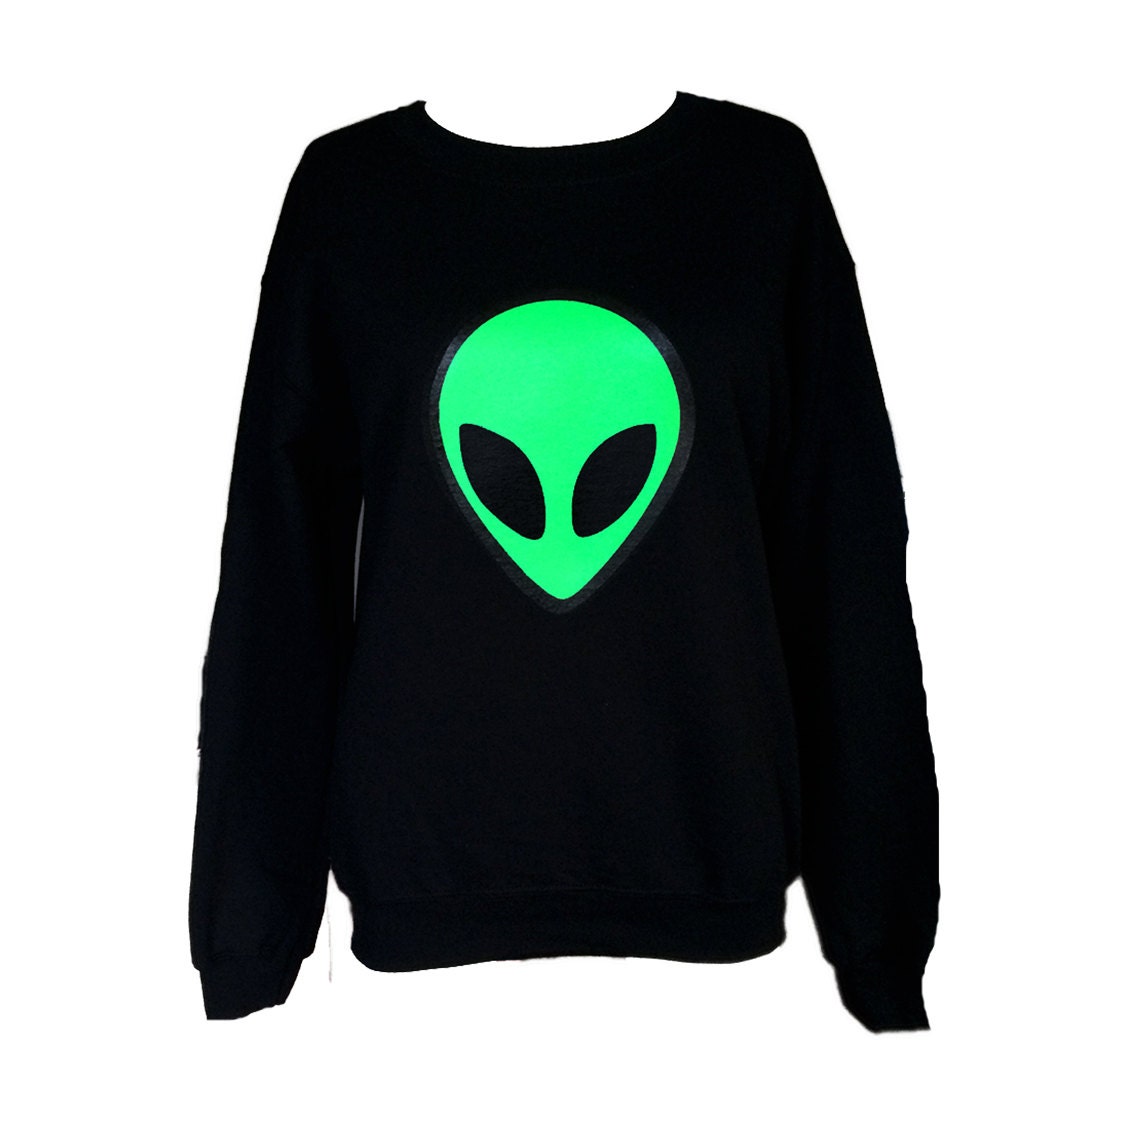 Alien Sweatshirt Black Crew neck Sweatshirt by Foxcultvintage